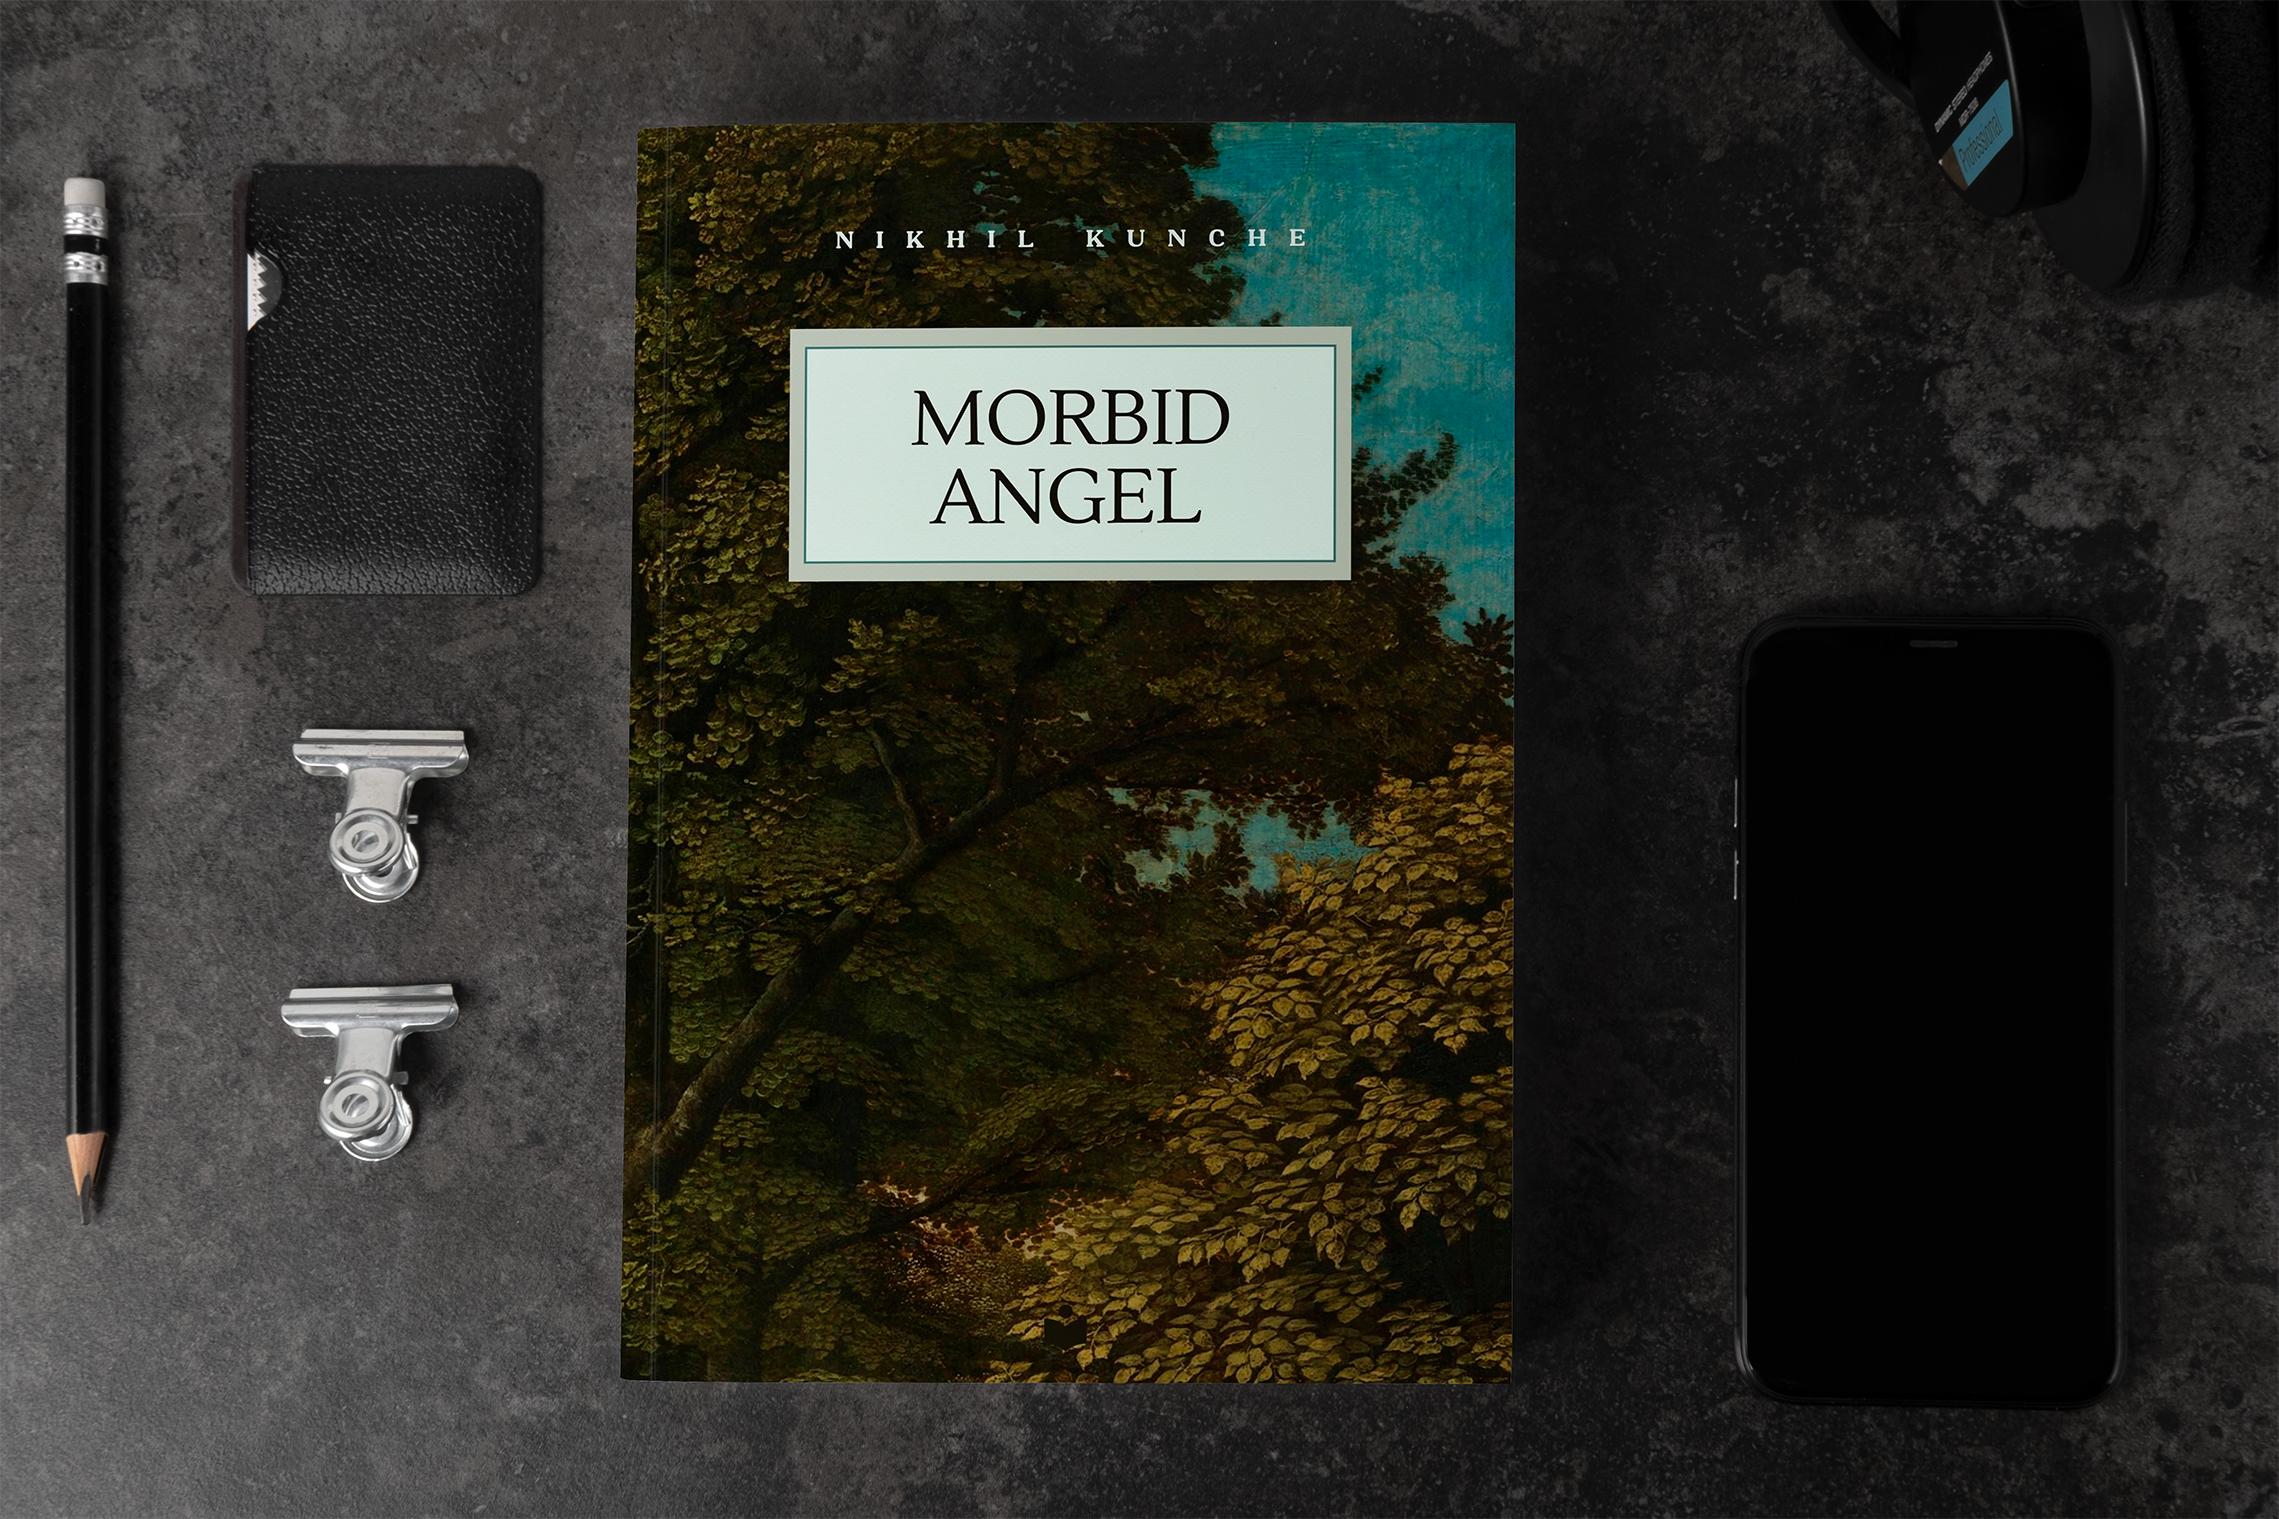 Morbid Angel by Nikhil Kunche